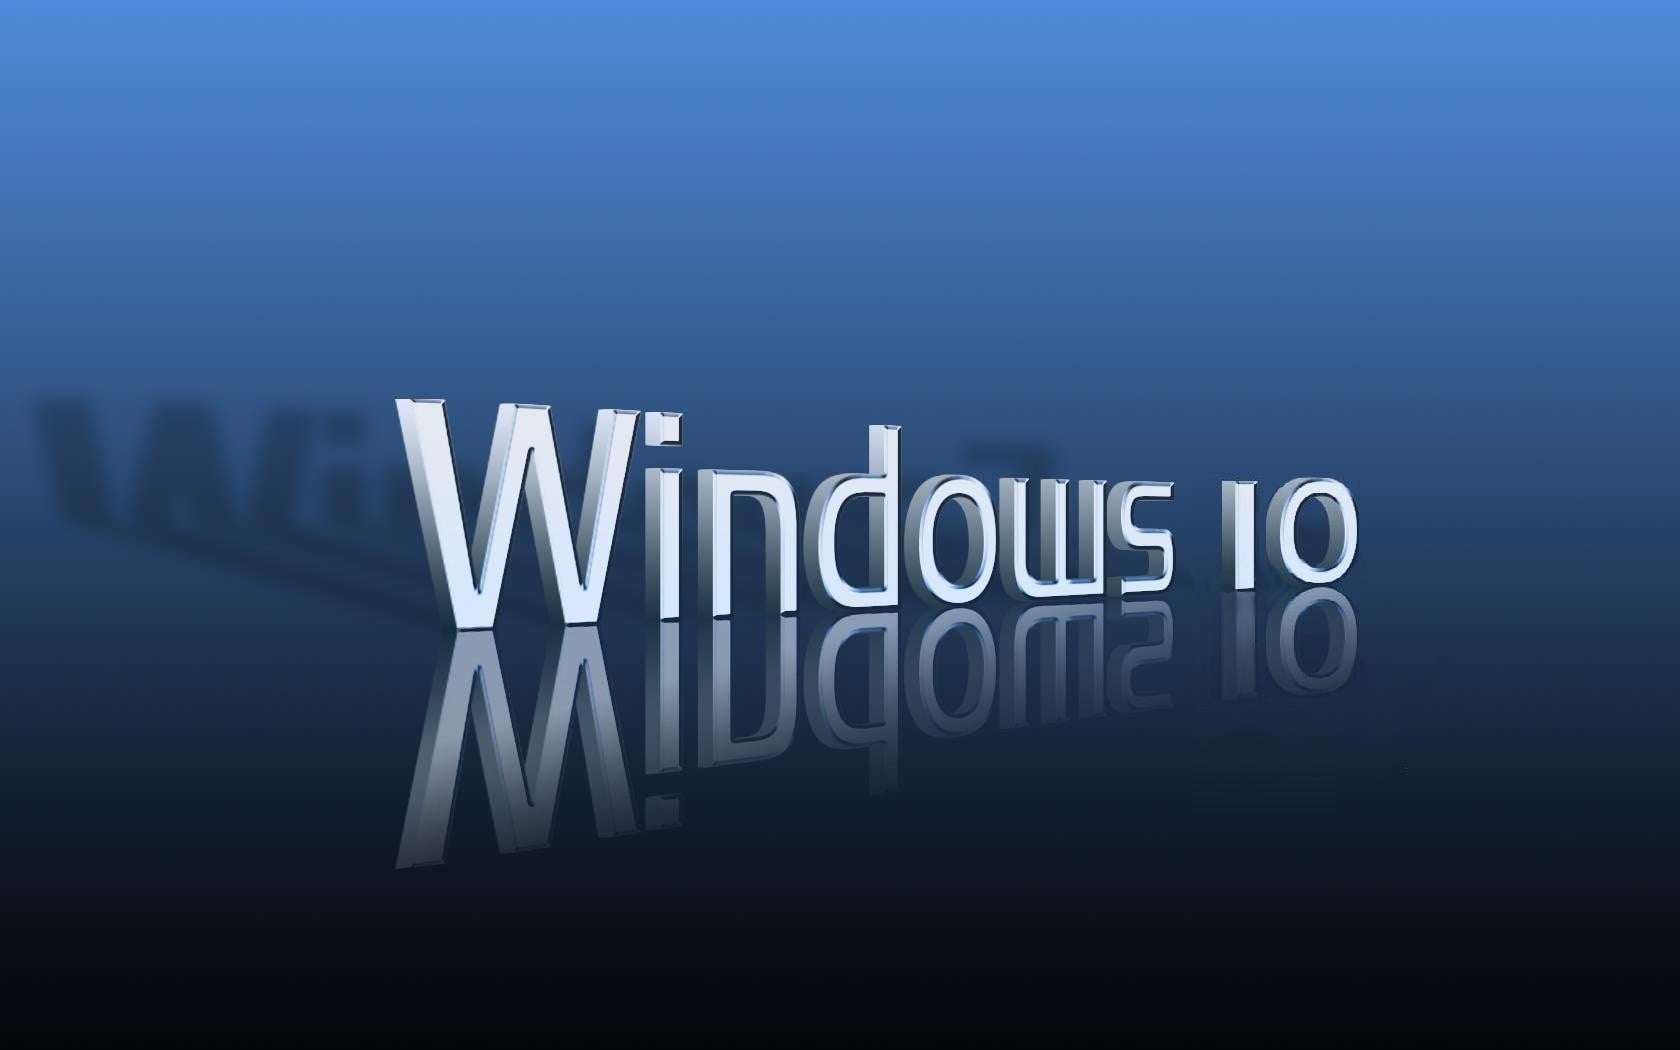 Windows 10 text, communication, western script, no people, blue